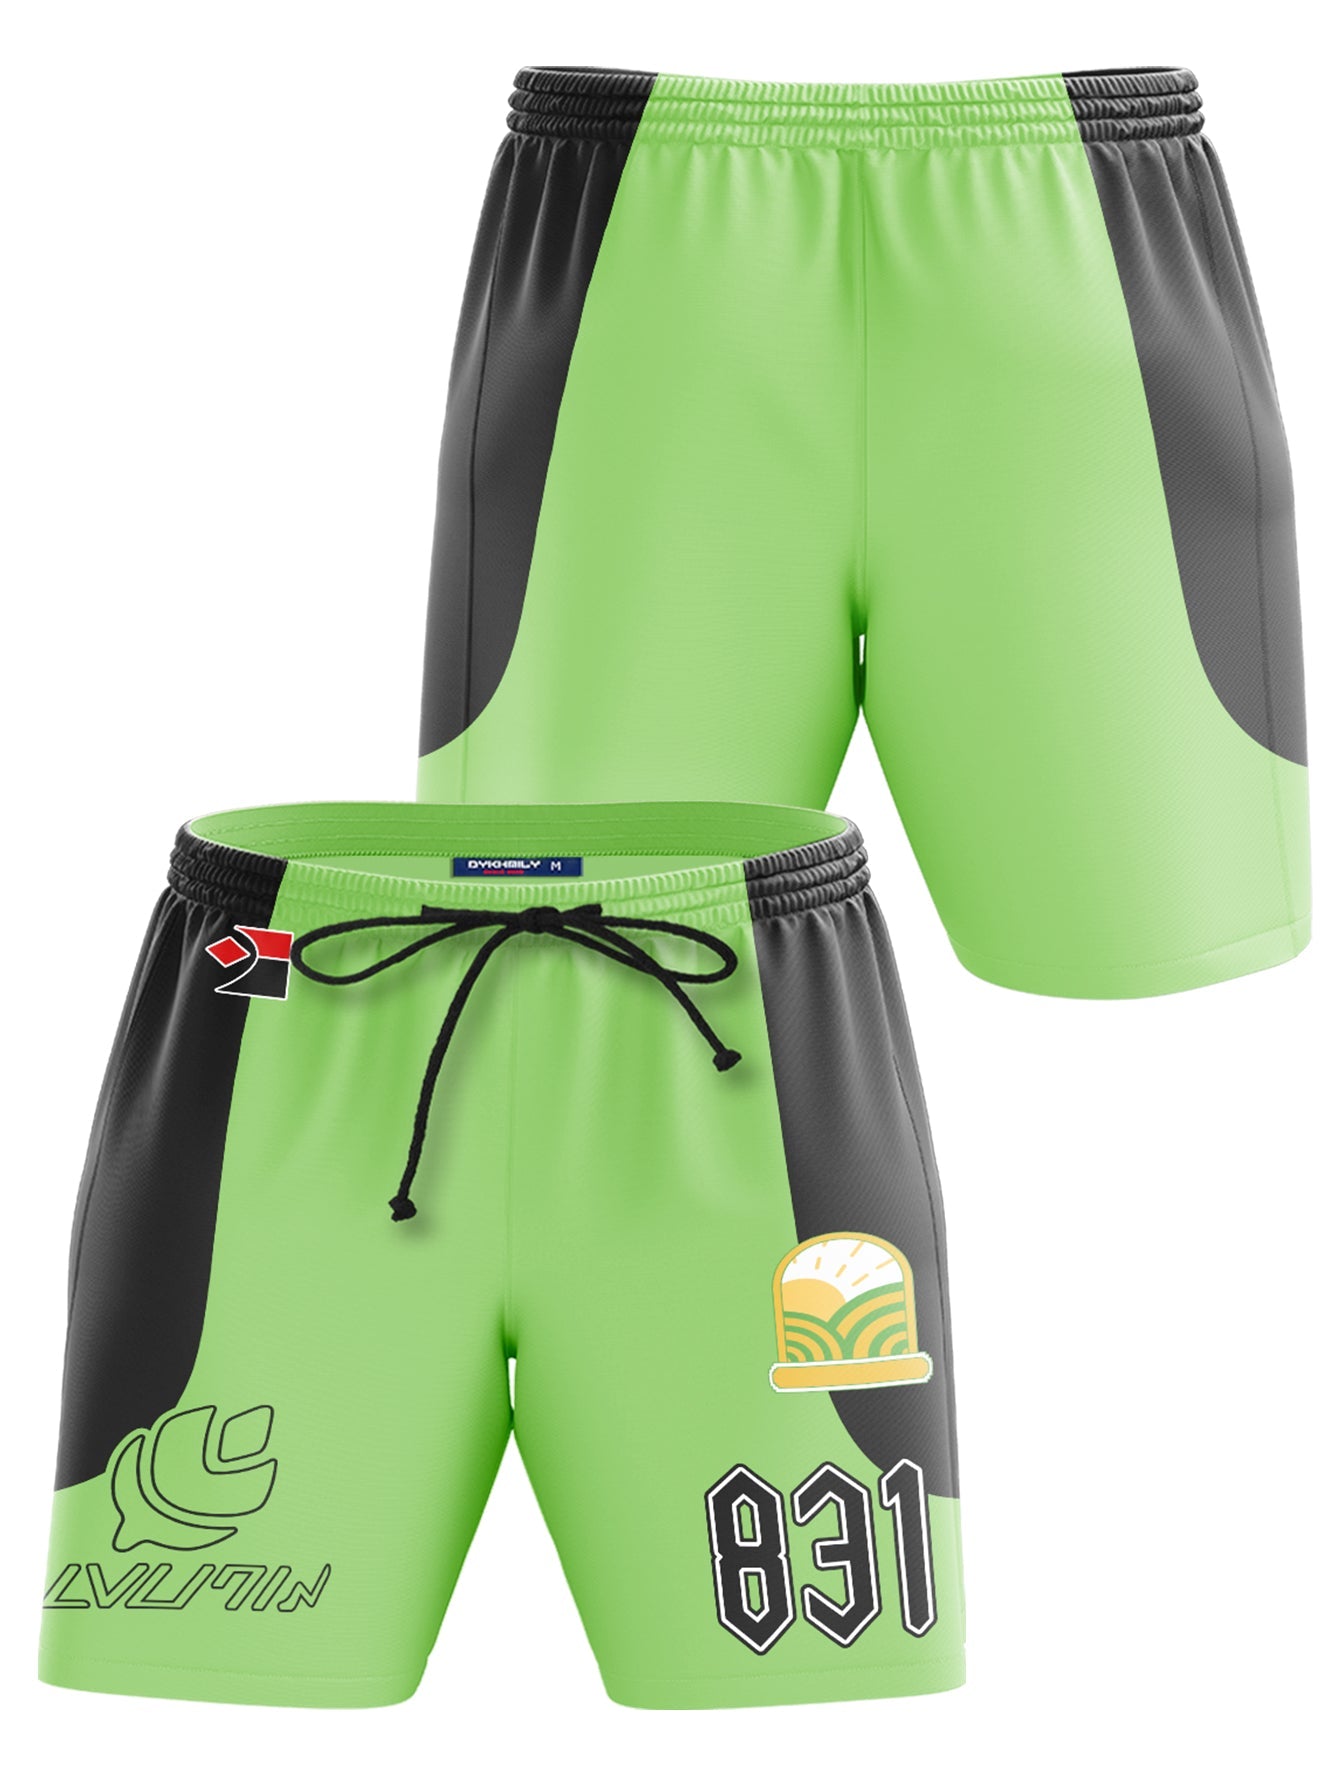 Fandomaniax - [Buy 1 Get 1 SALE] Poke Grass Uniform Beach Shorts